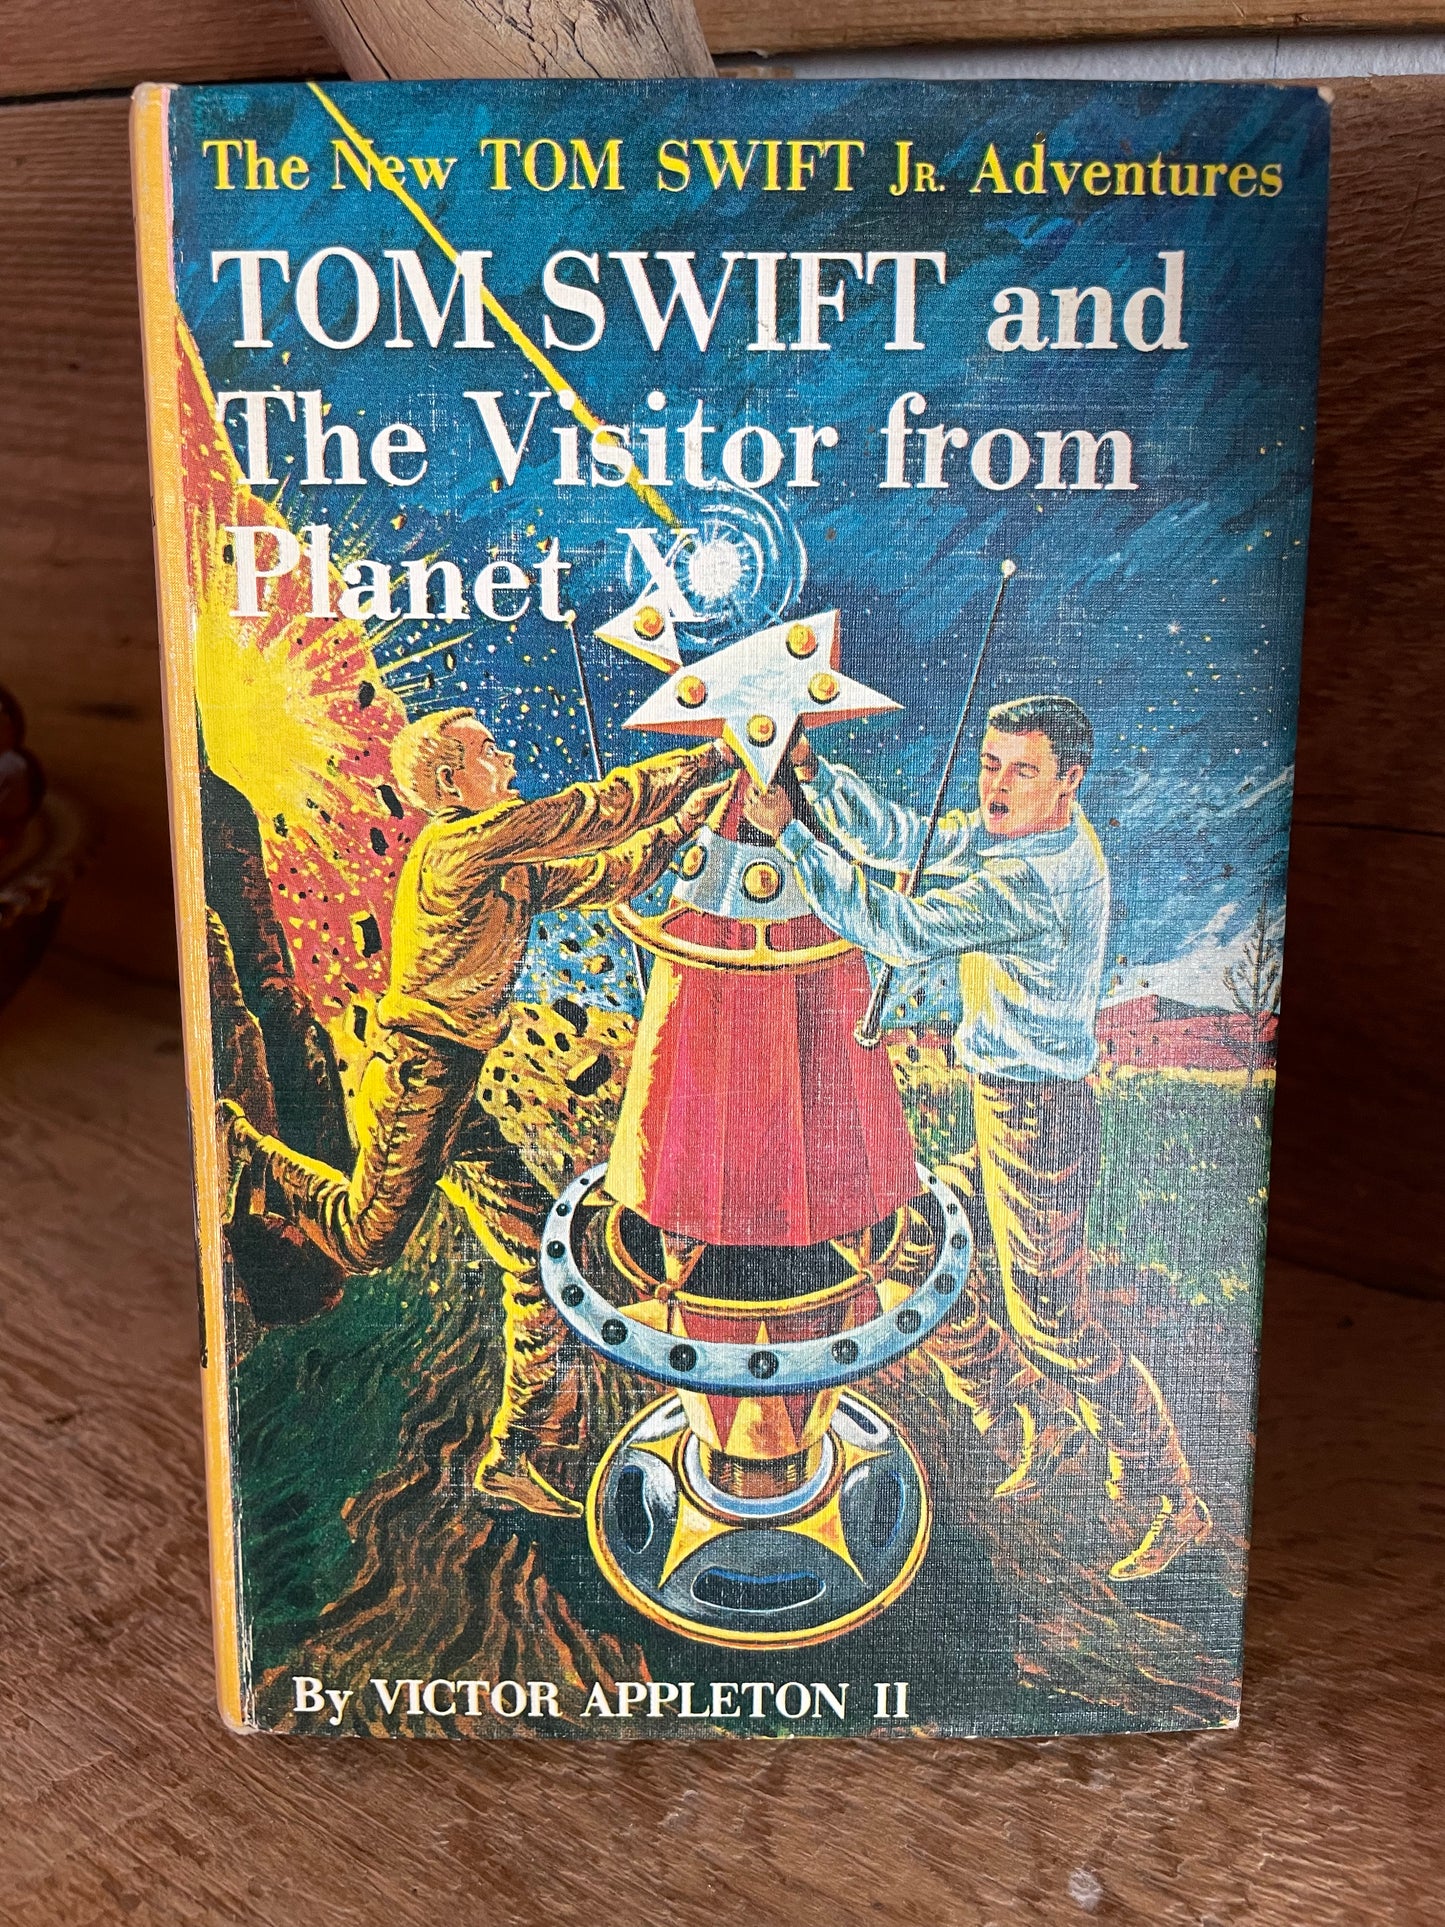 TOM SWIFT Jr. Adventures